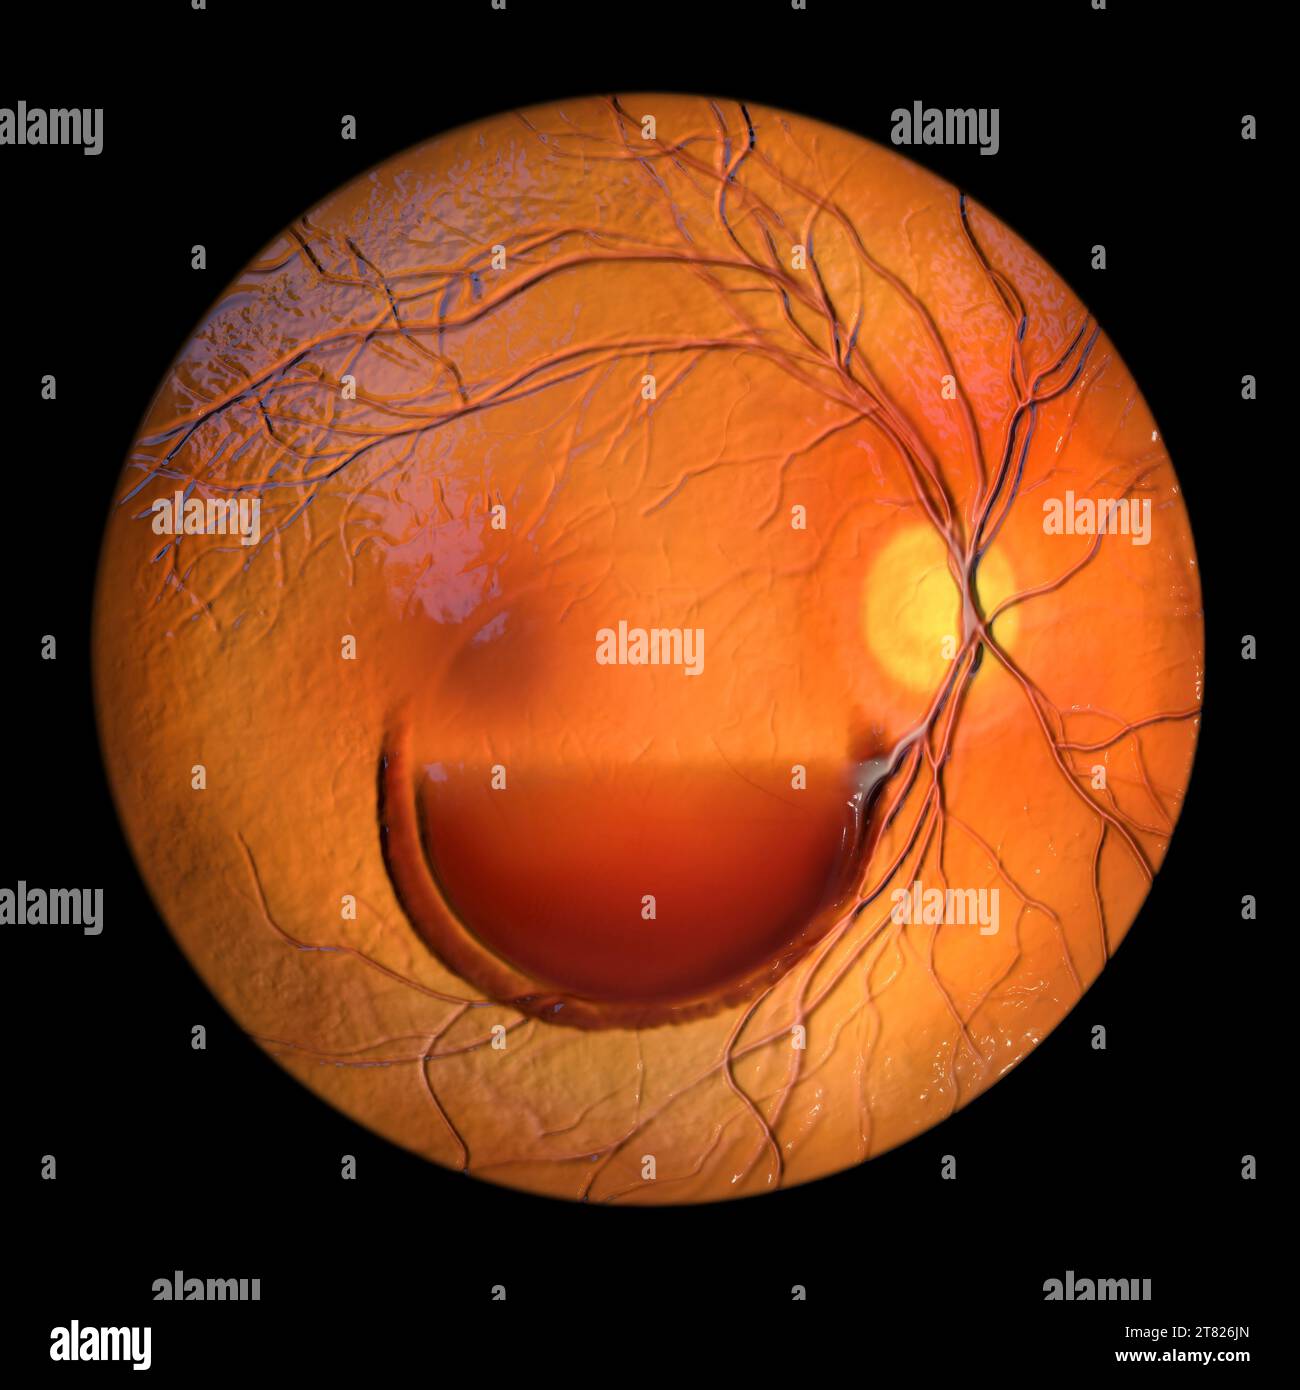 Valsava retinopathy, illustration Stock Photo